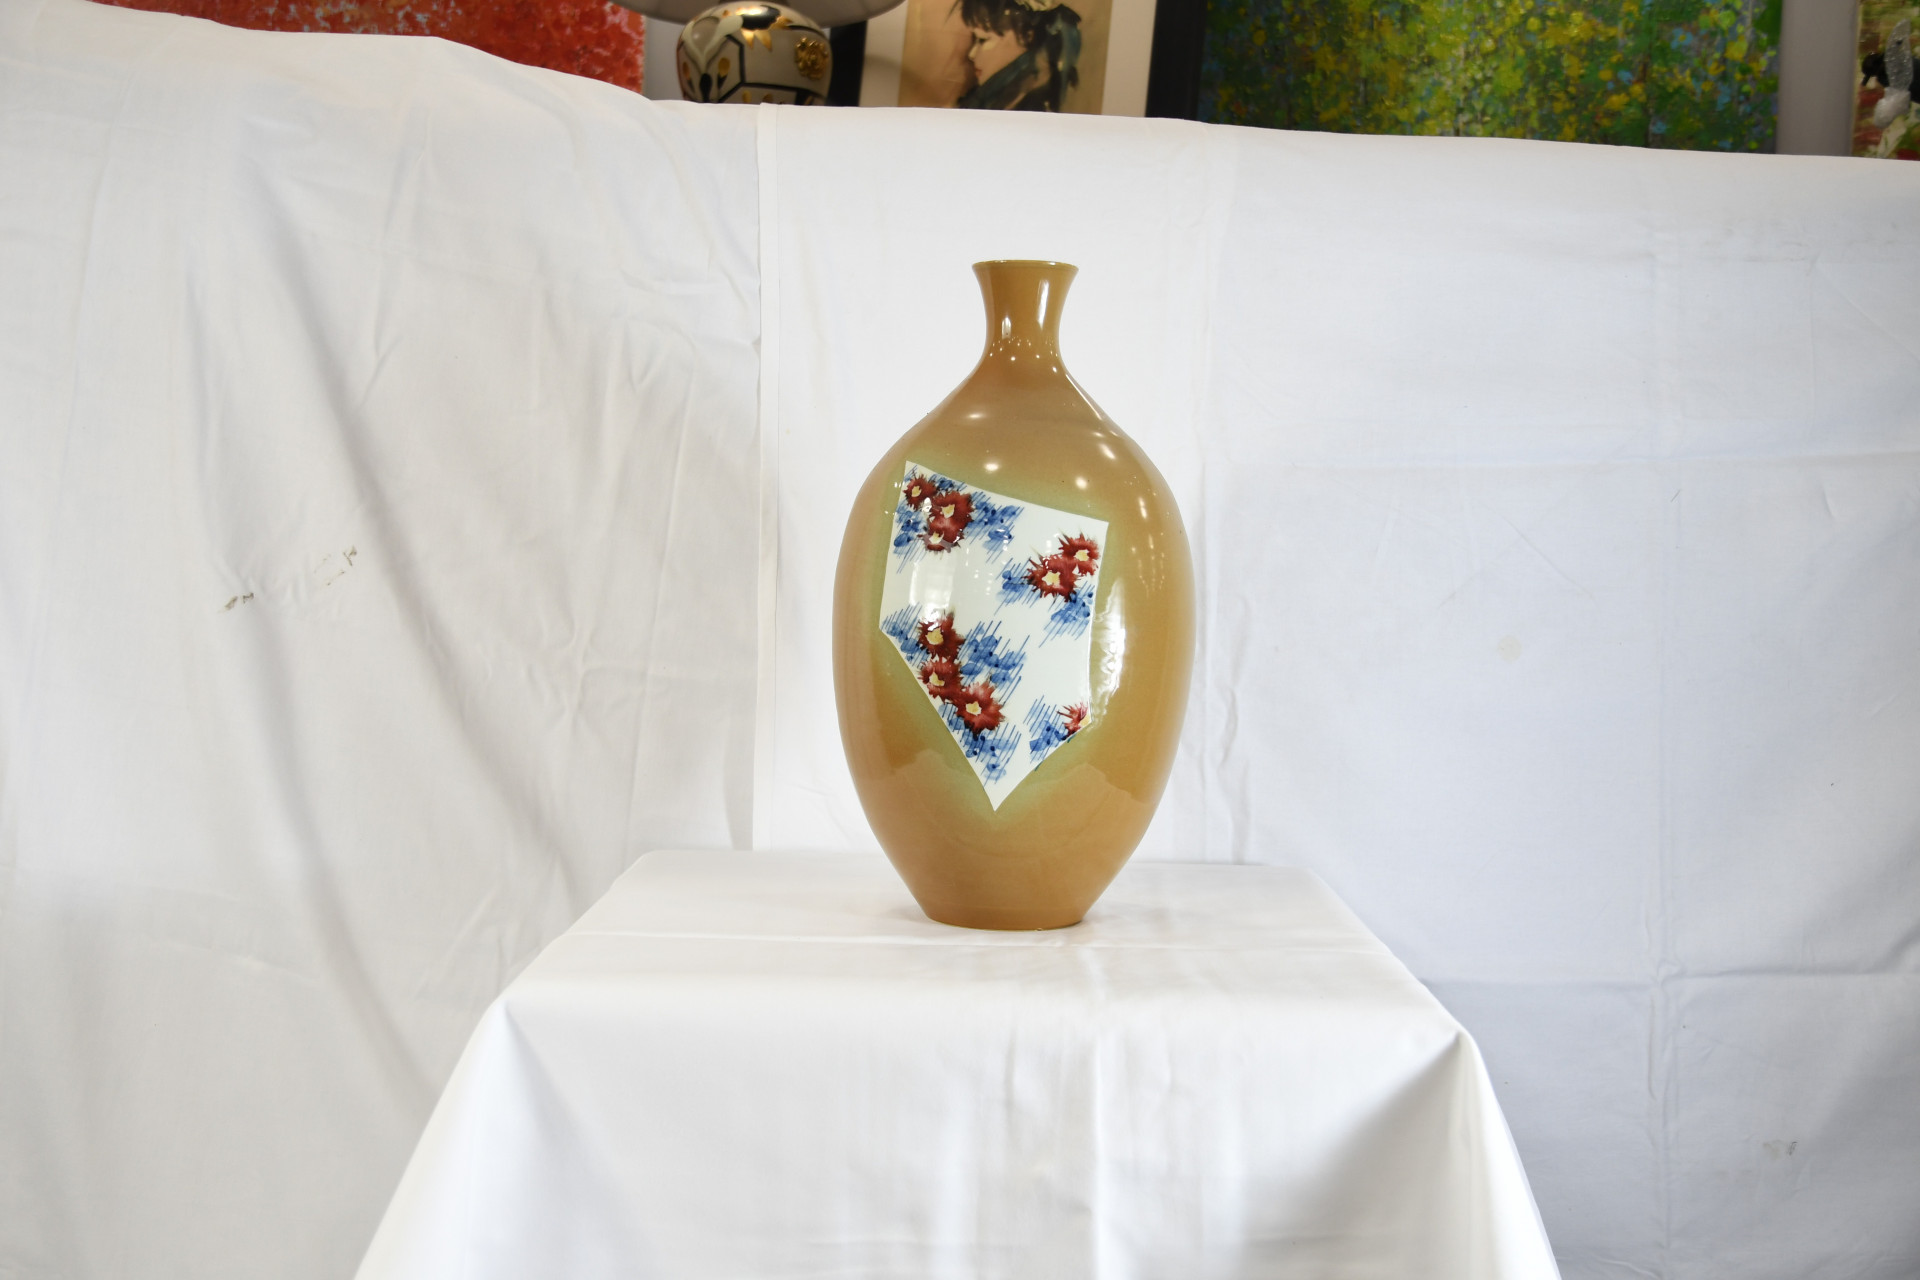 Hand made vase